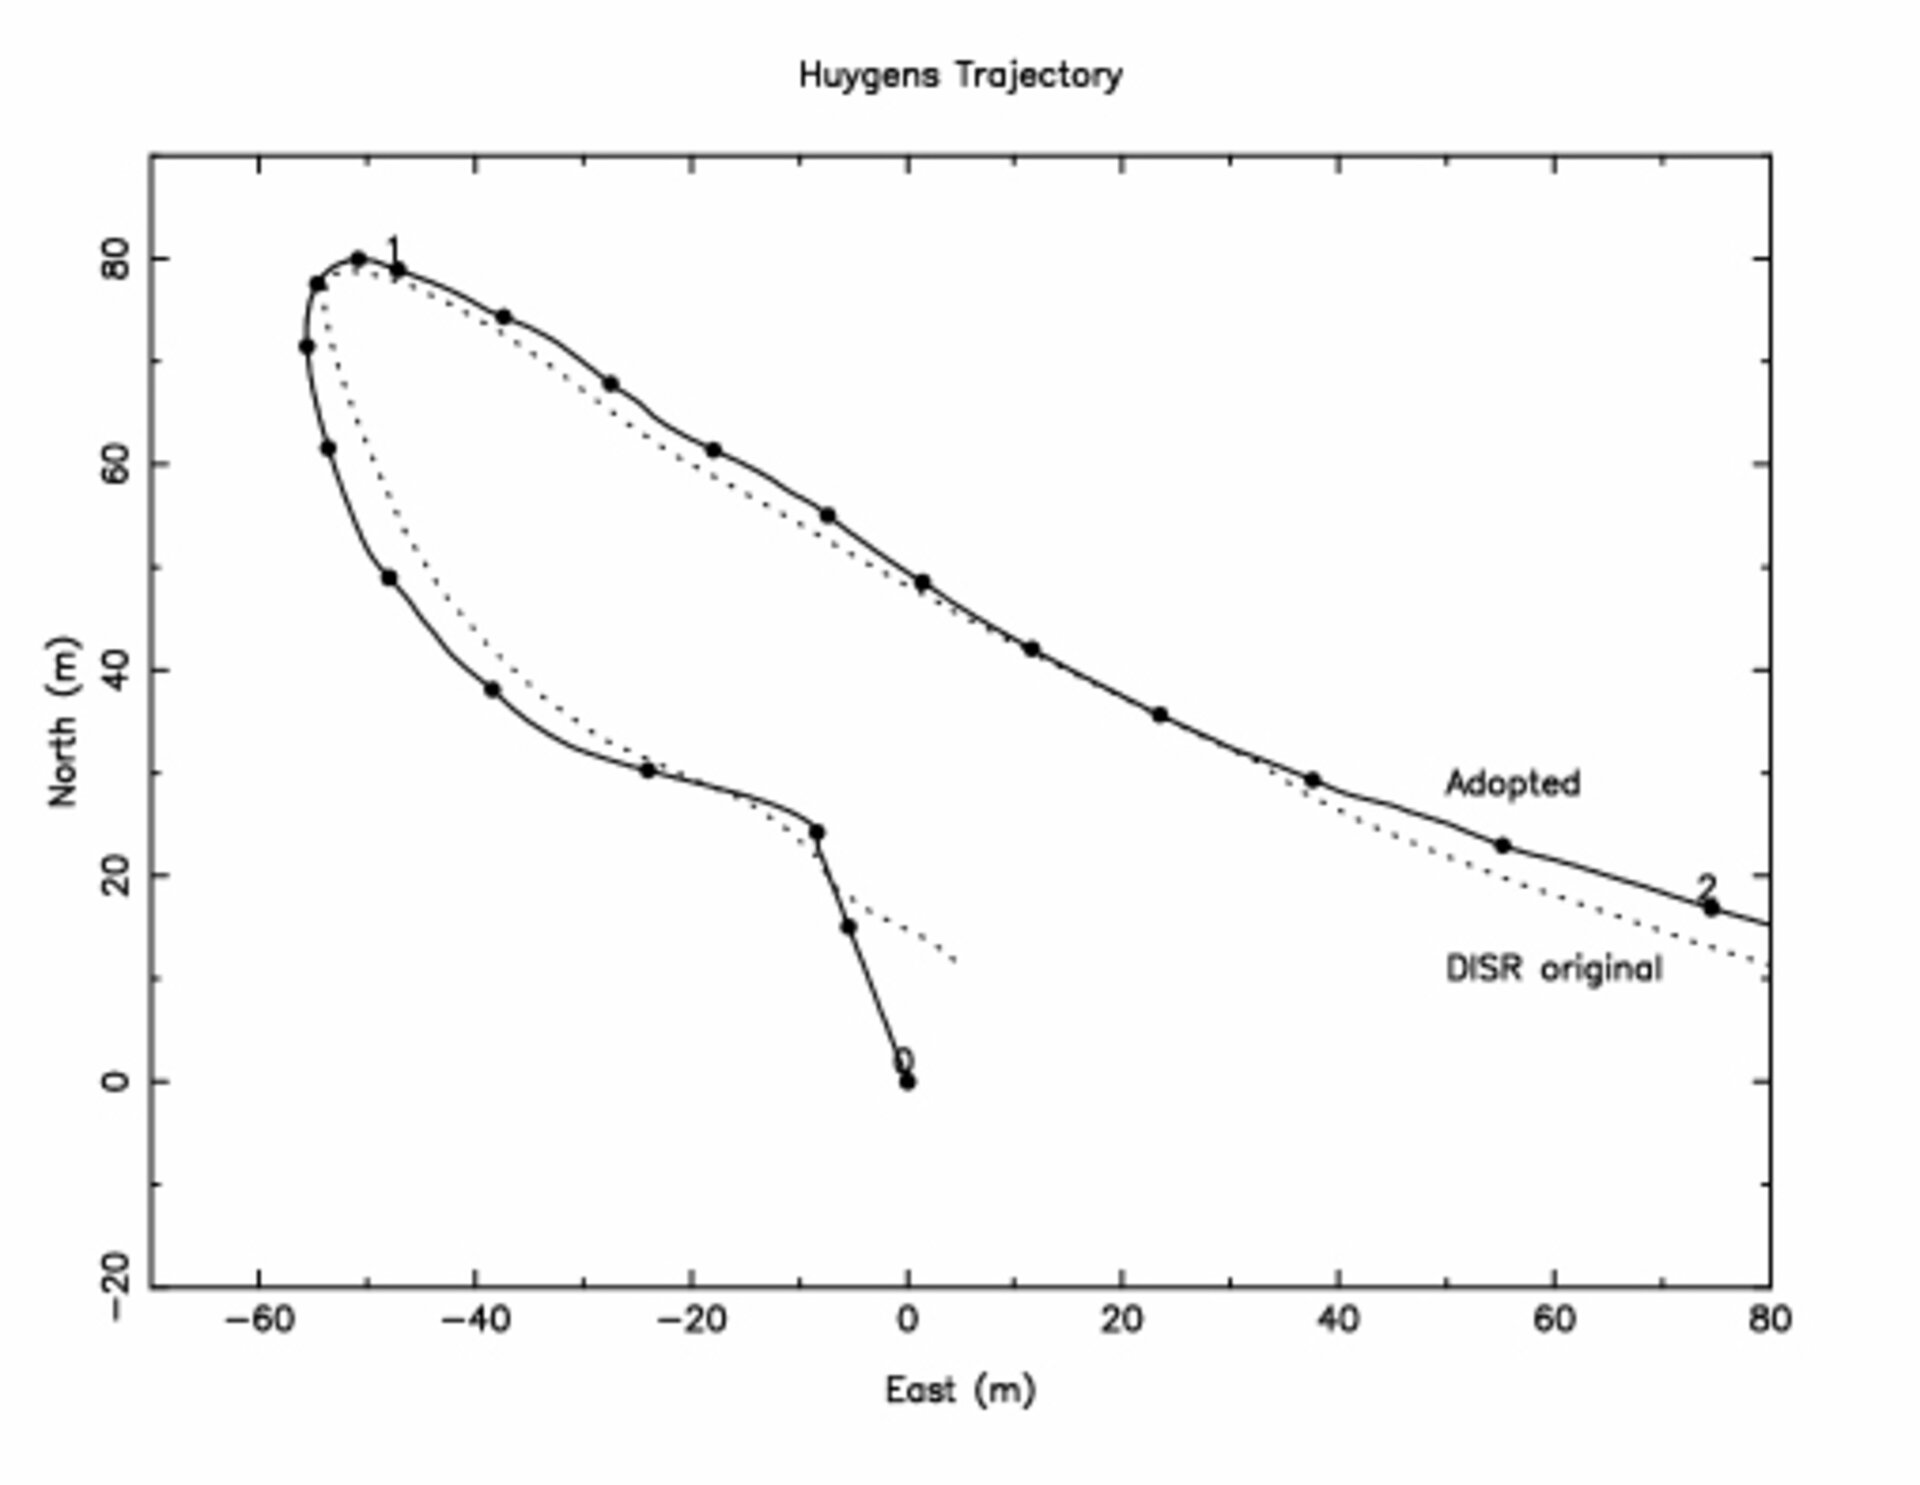 Trajectory of Huygens starting at 2 kilometres altitude